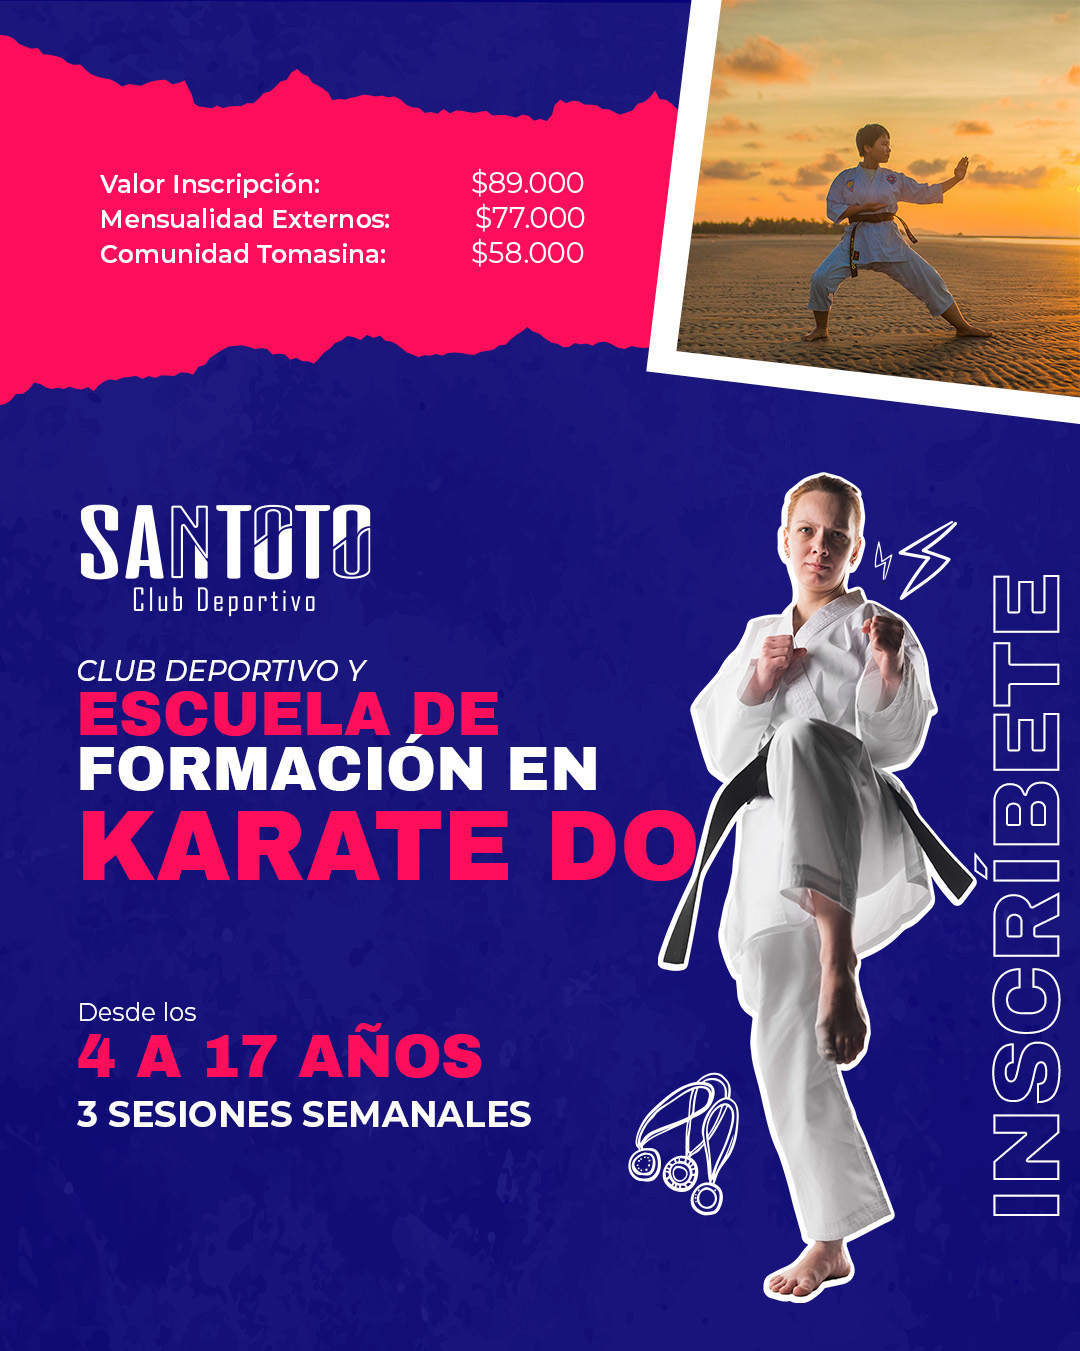 KarateDo_Club_Deportivo_Santoto_Tunja_2